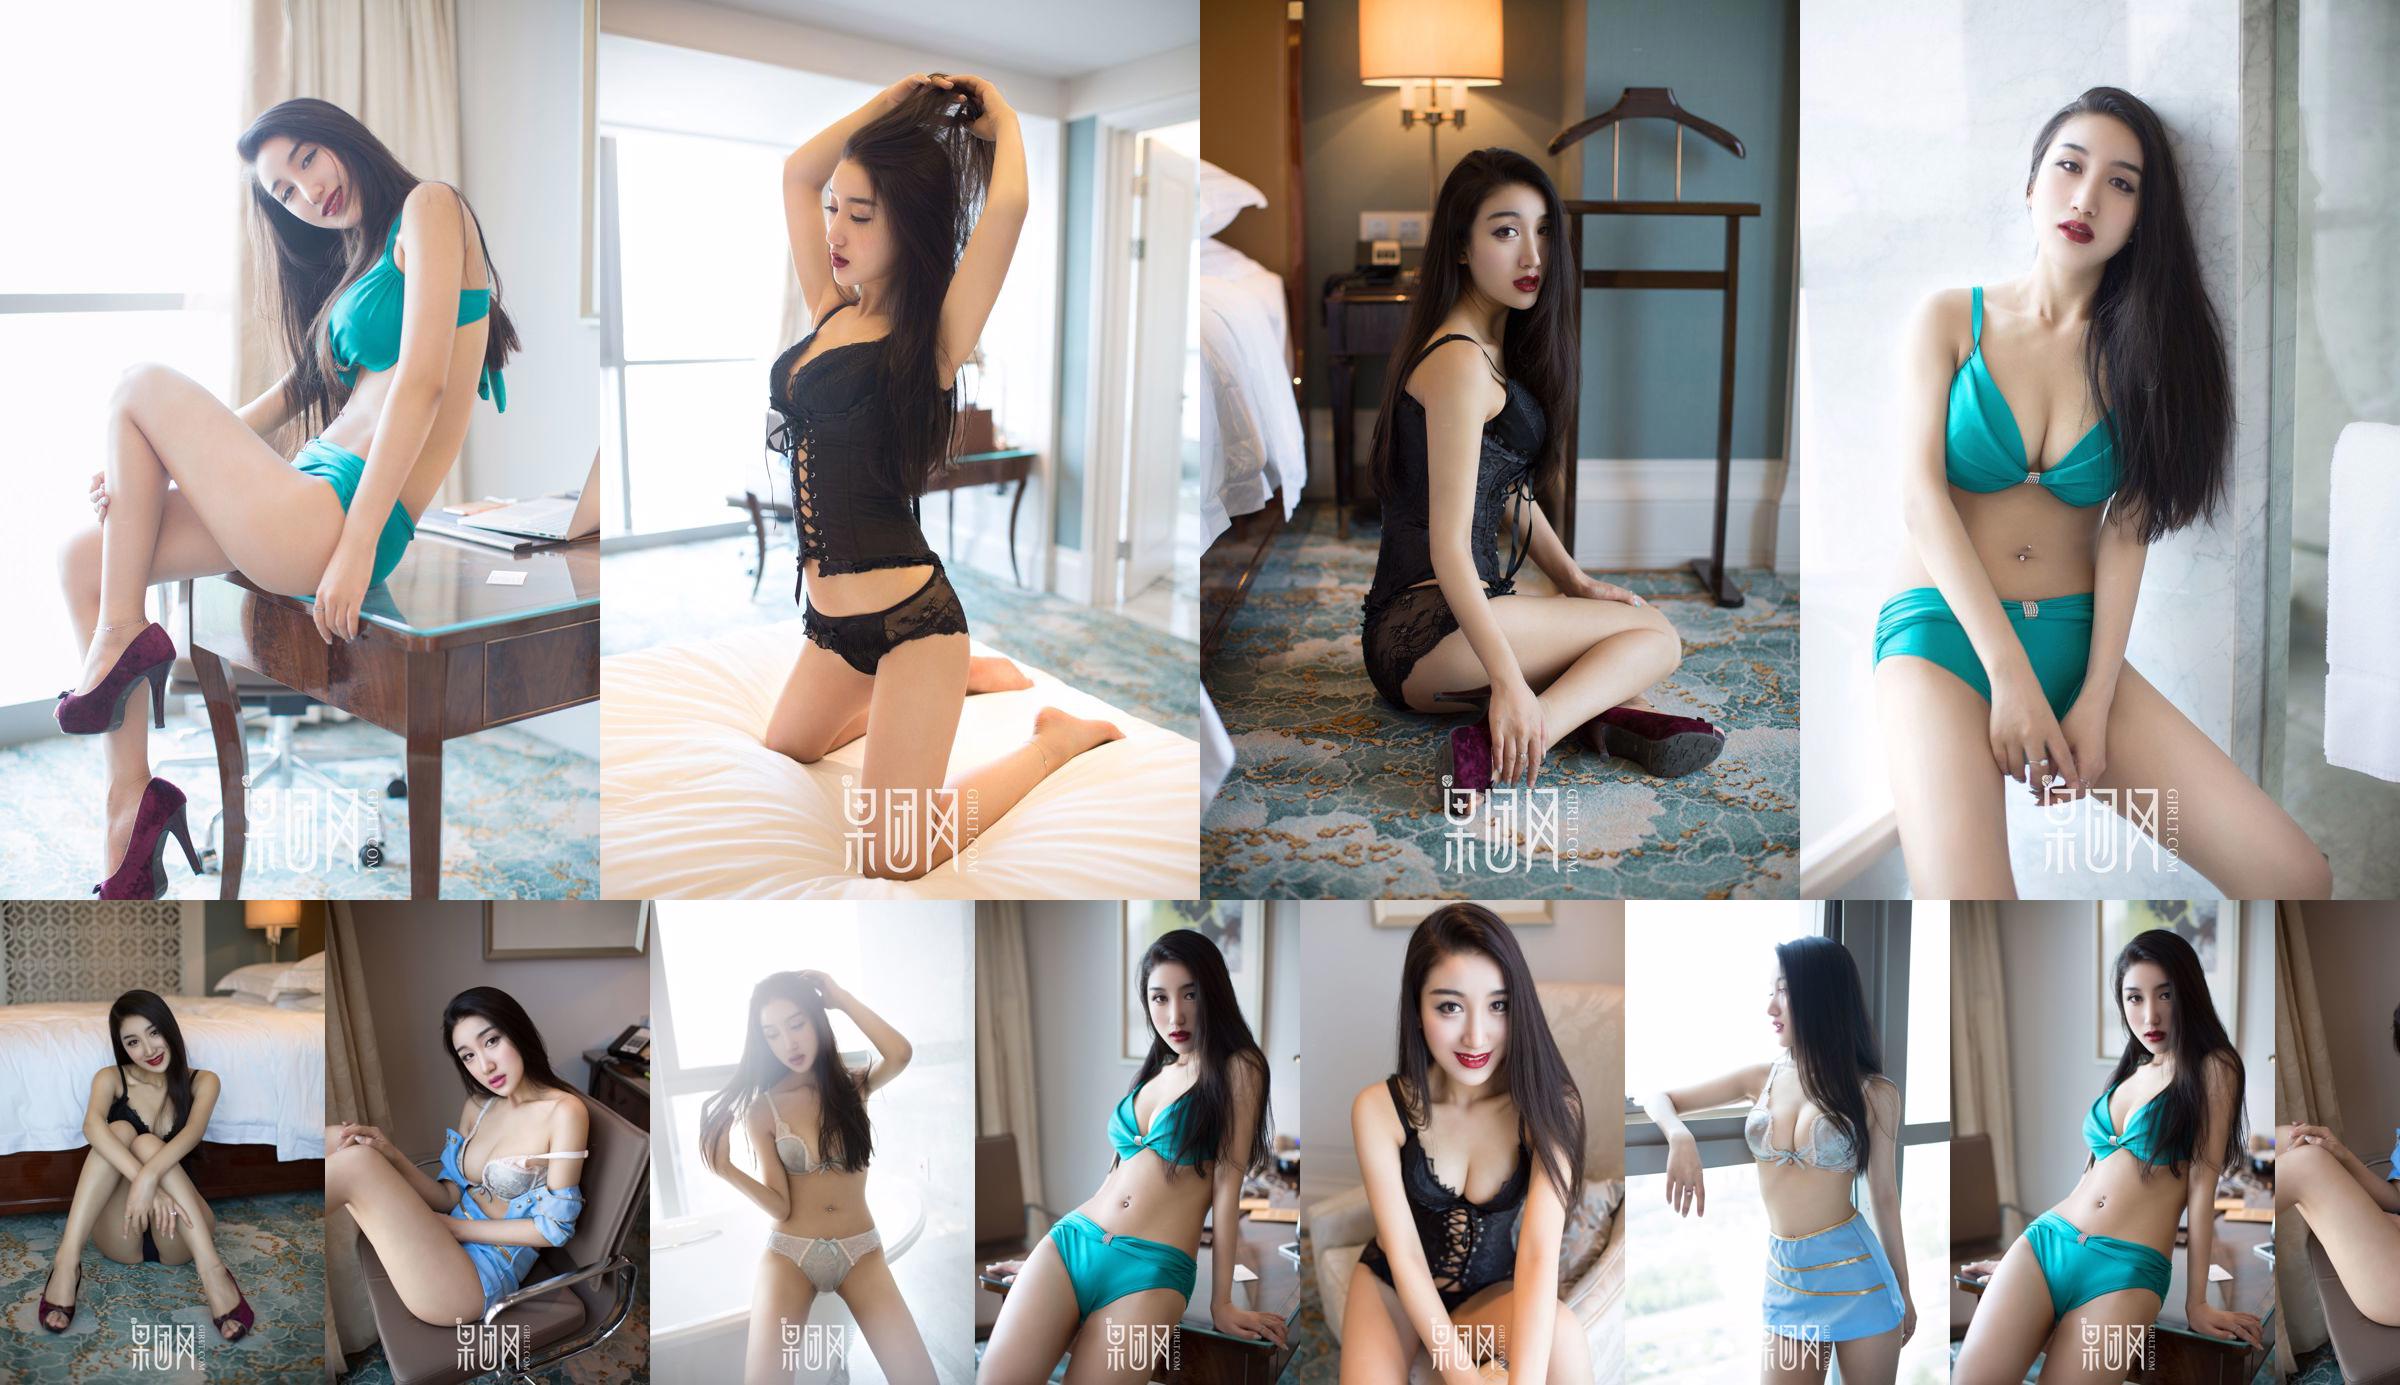 Wang Zheng "Vent chaud sexy" [Girlt] No.050 No.09d42f Page 1